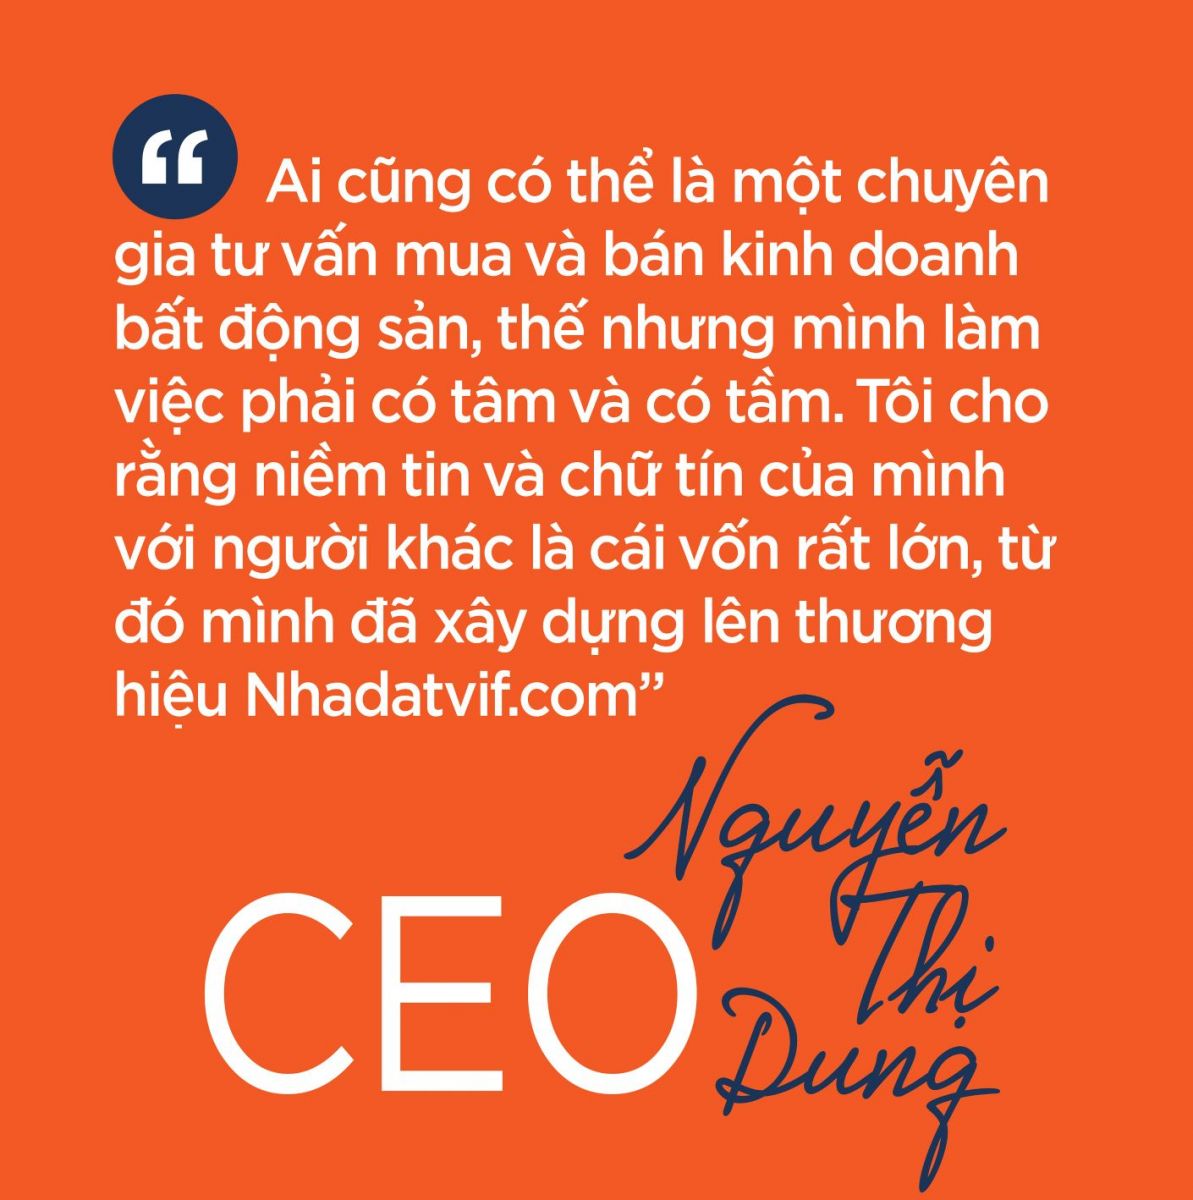 CEO Nguyễn Thị Dung